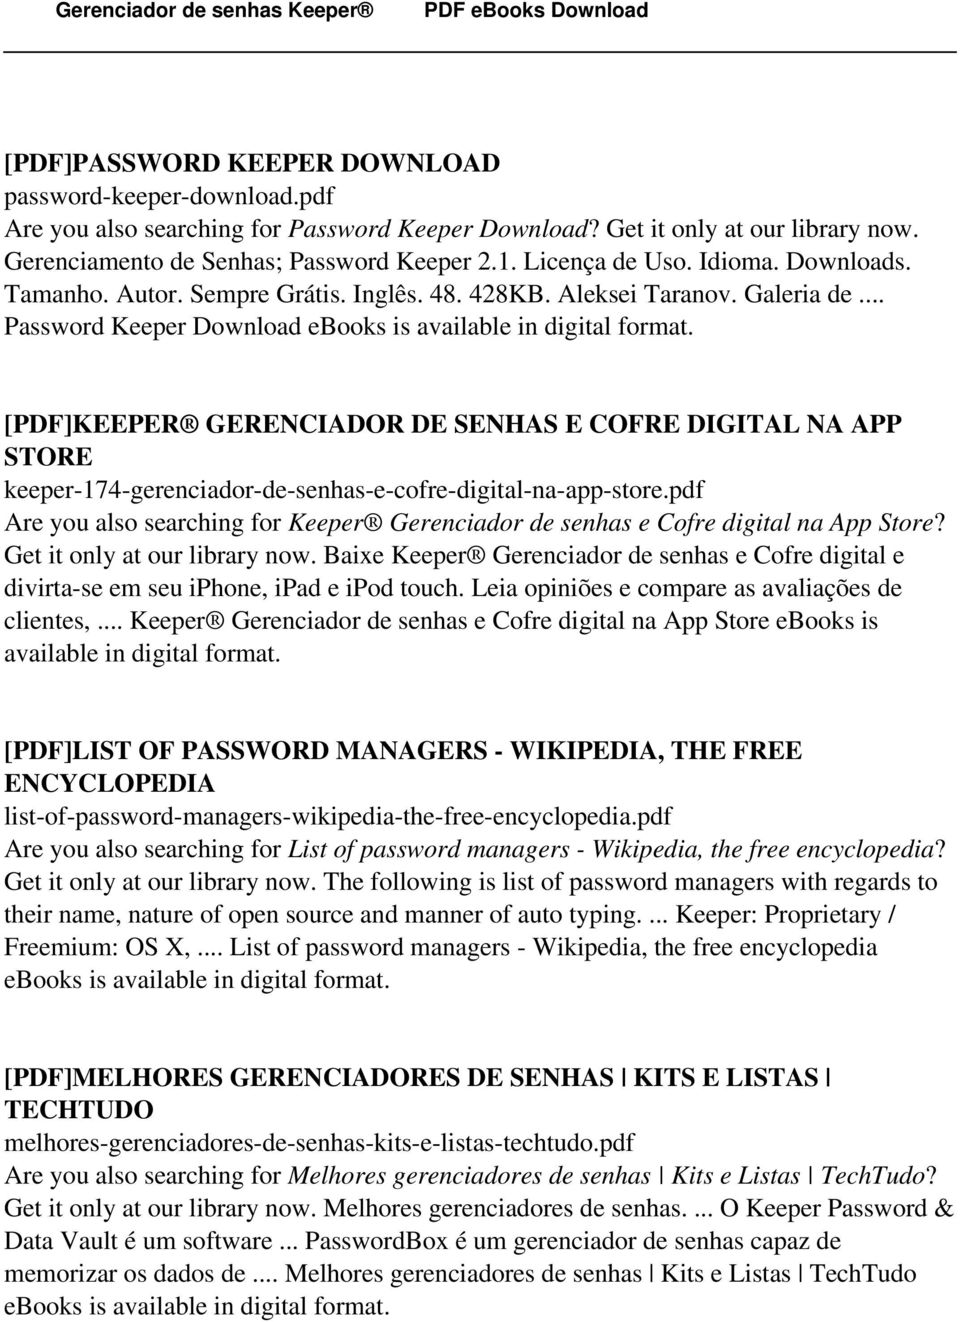 .. Password Keeper Download ebooks is [PDF]KEEPER GERENCIADOR DE SENHAS E COFRE DIGITAL NA APP STORE keeper-174-gerenciador-de-senhas-e-cofre-digital-na-app-store.